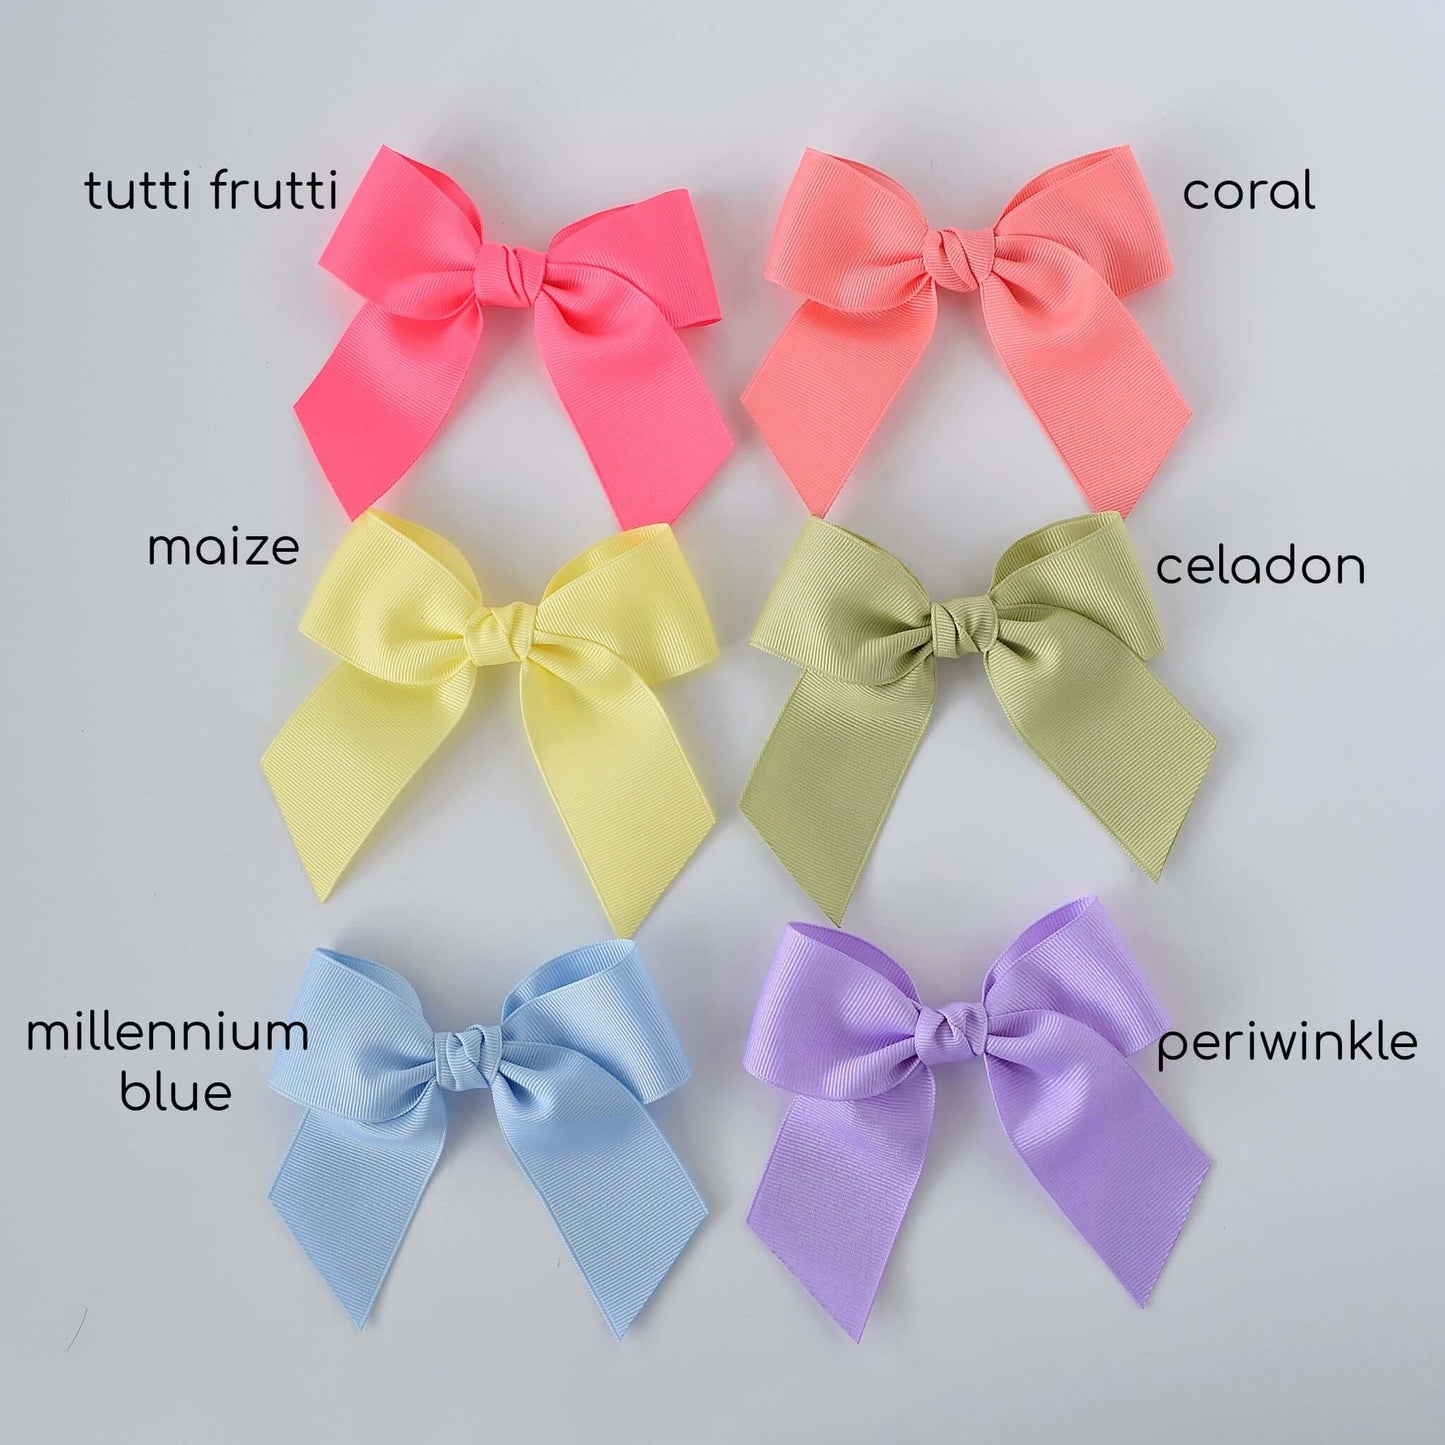 Six 4 inch grosgrain Sailor hair bows in pastel colors: tutti frutti, coral, maize, celadon, millennium blue, and periwinkle.